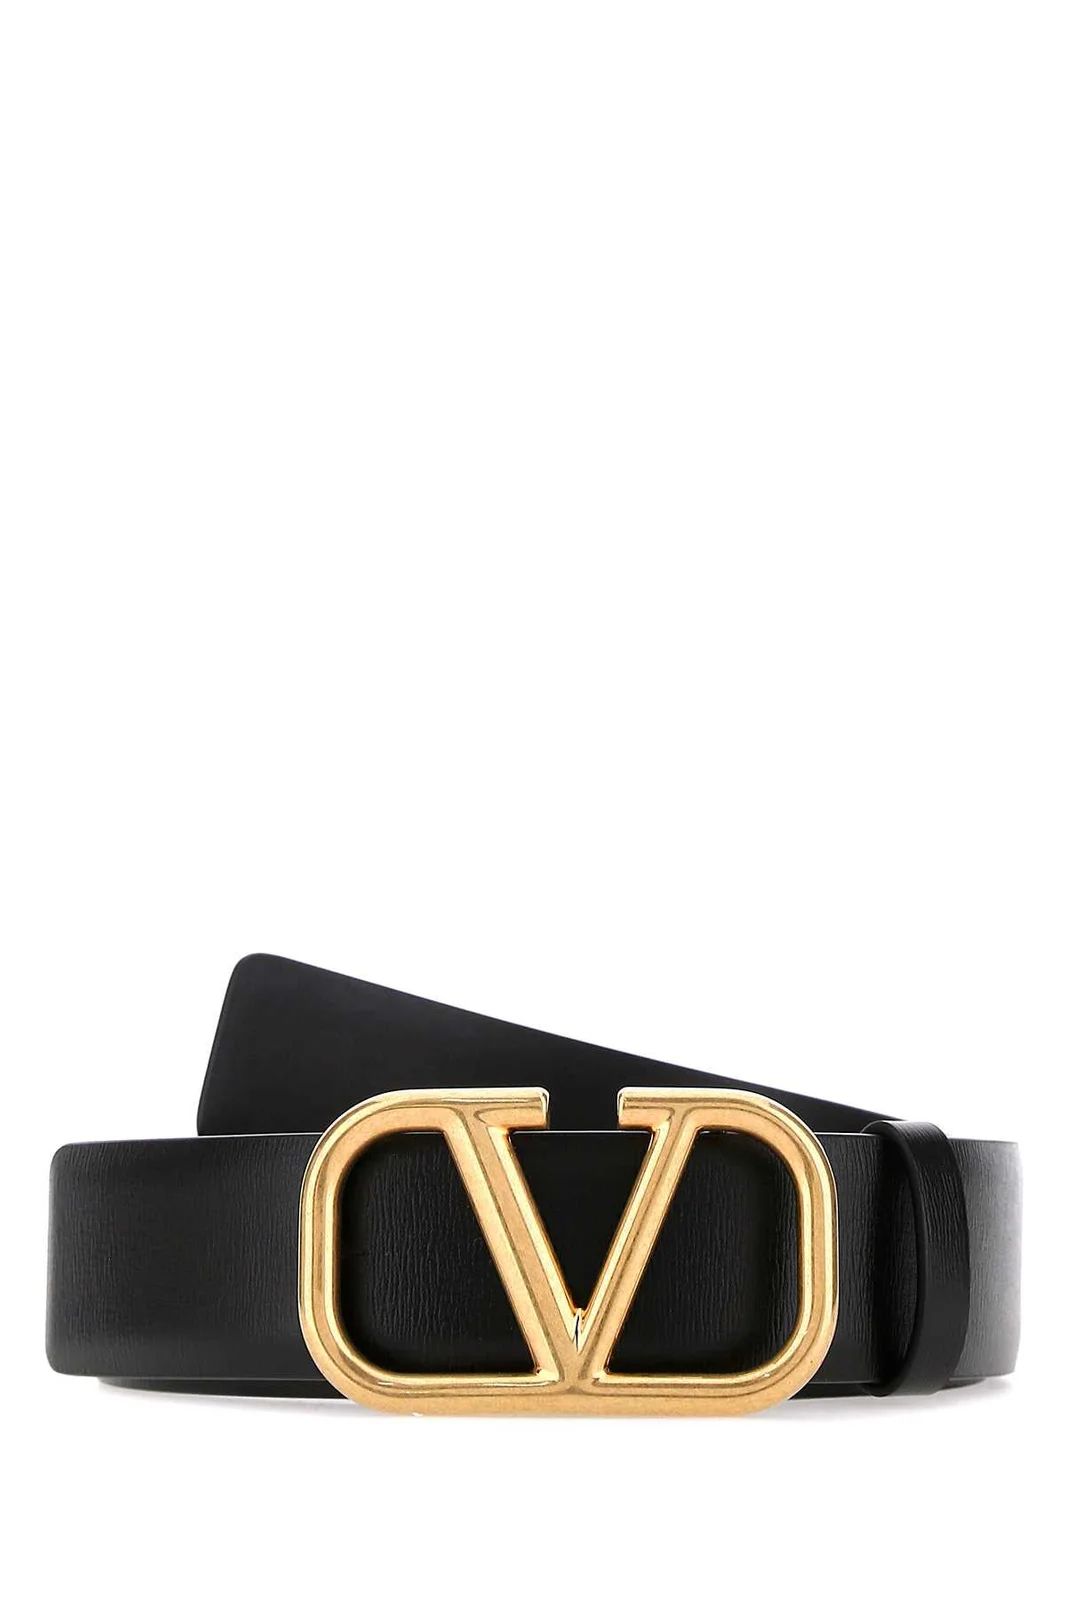 Valentino VLogo Buckle Belt | Cettire Global